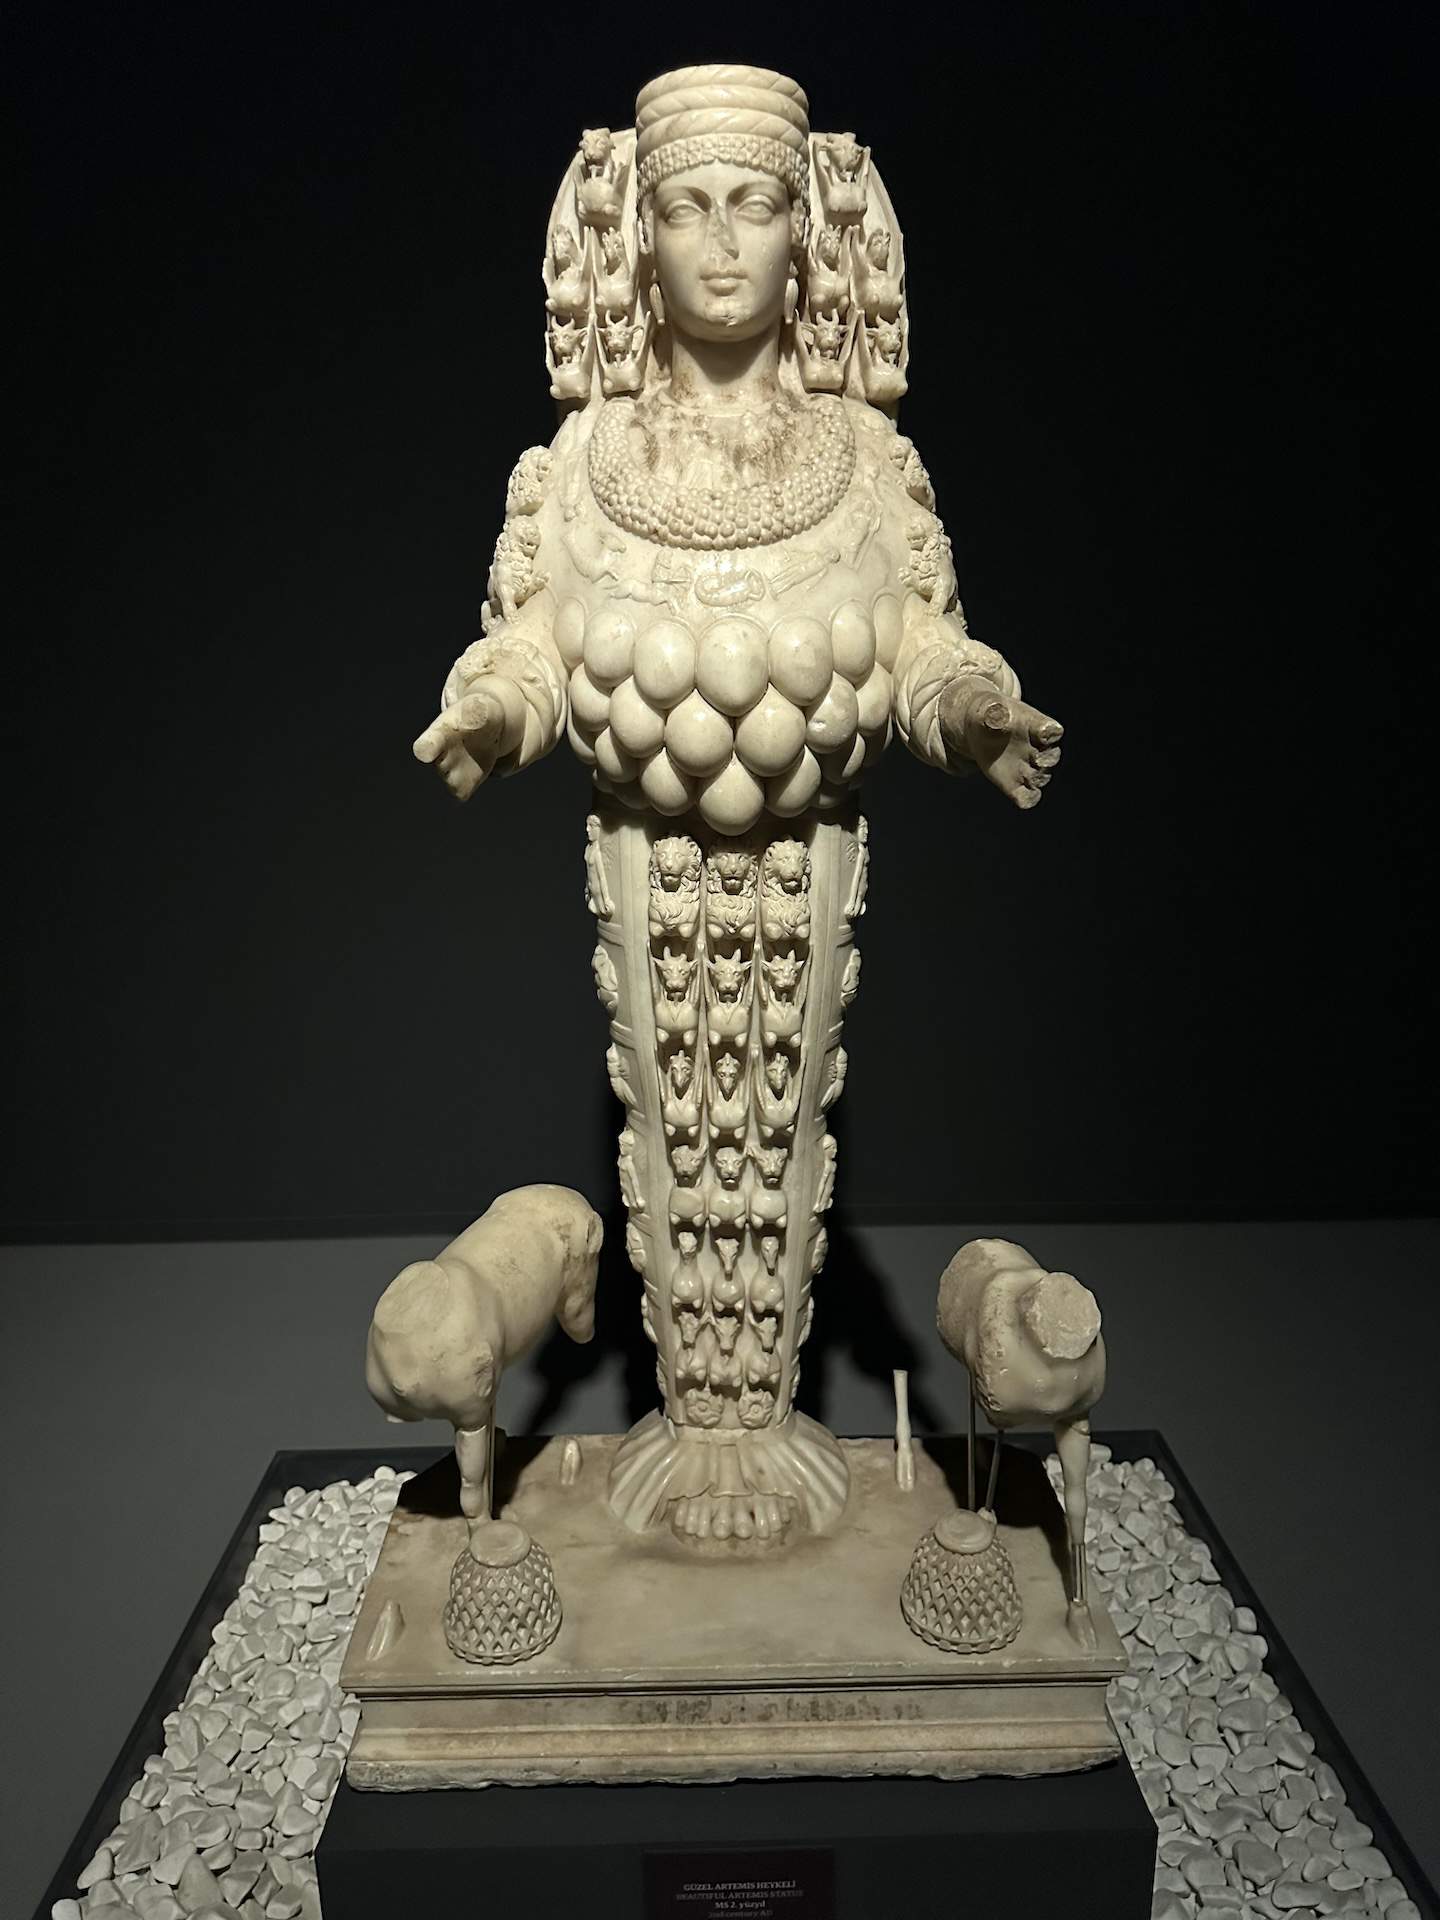 Beautiful Artemis Statue at the Ephesus Museum in Selçuk, Turkey